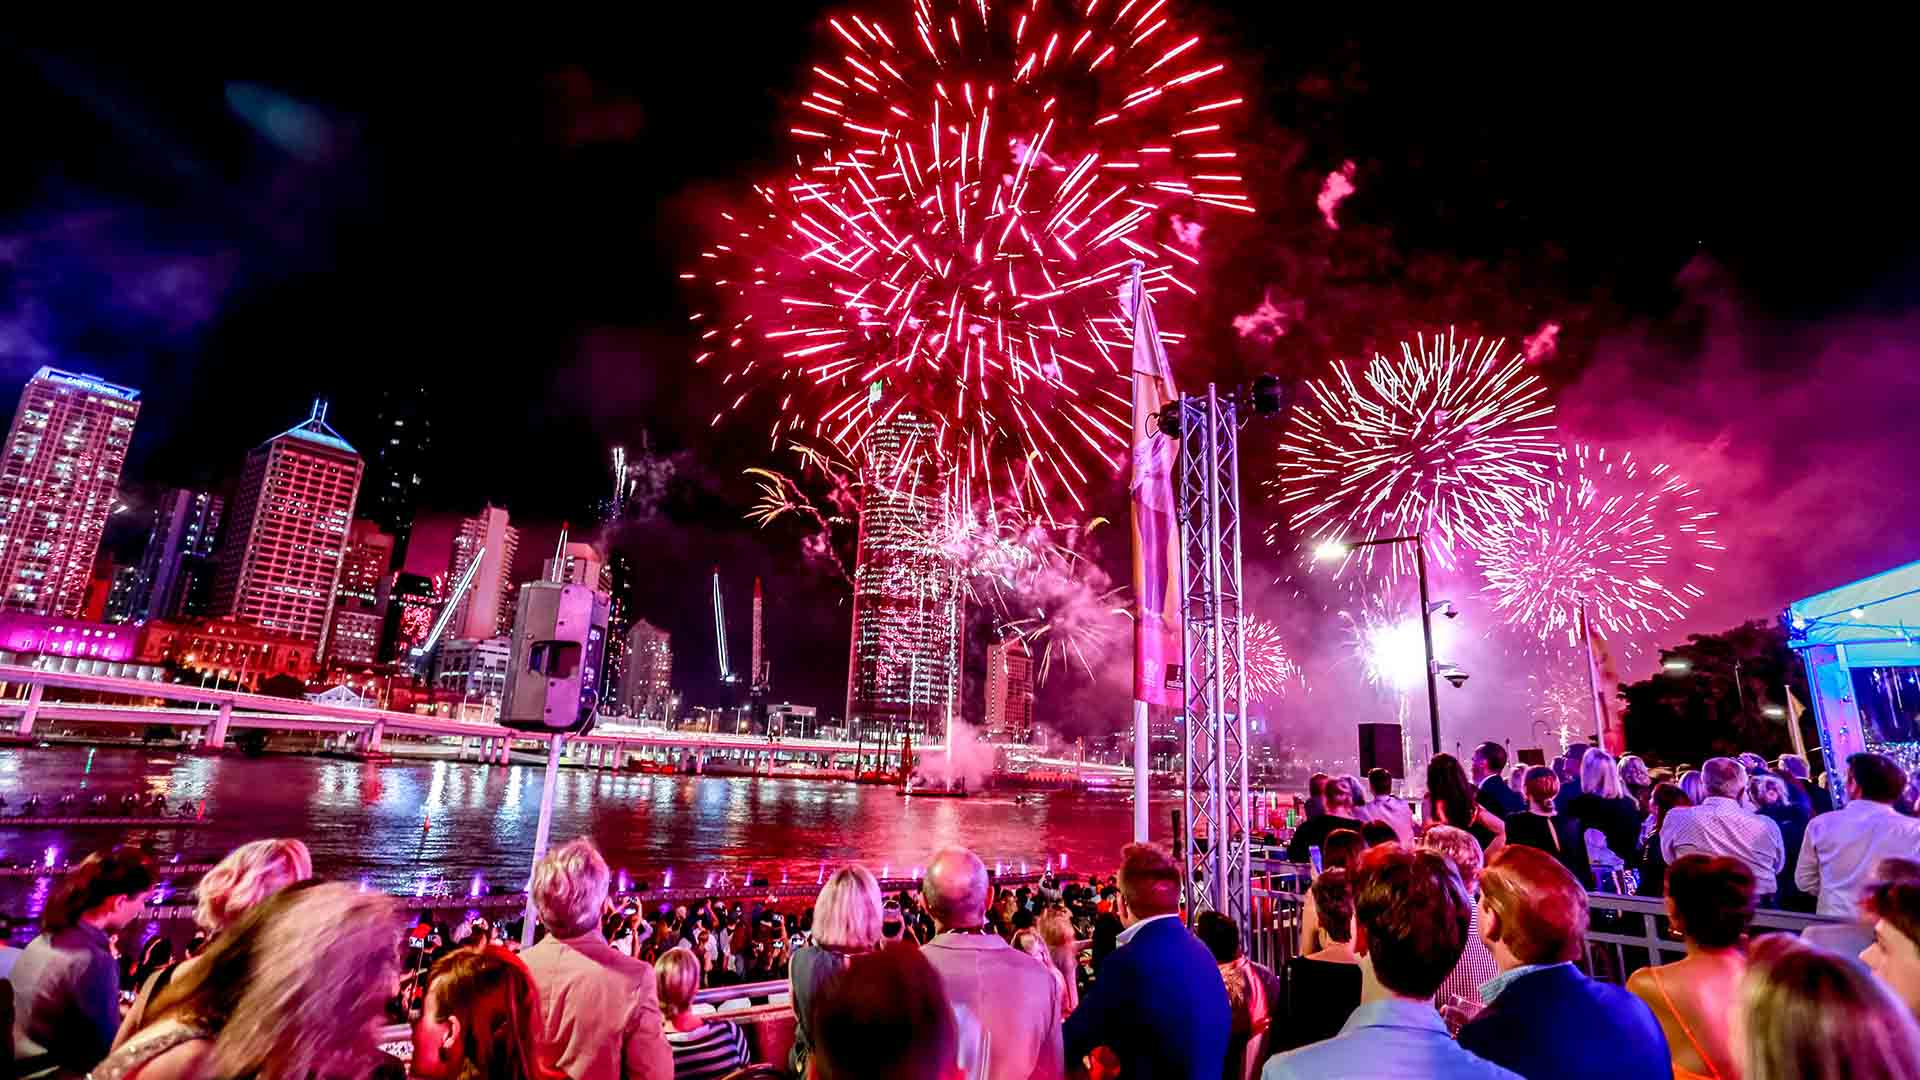 Riverfire Is Returning to Brighten Up Brisbane's Night Sky This